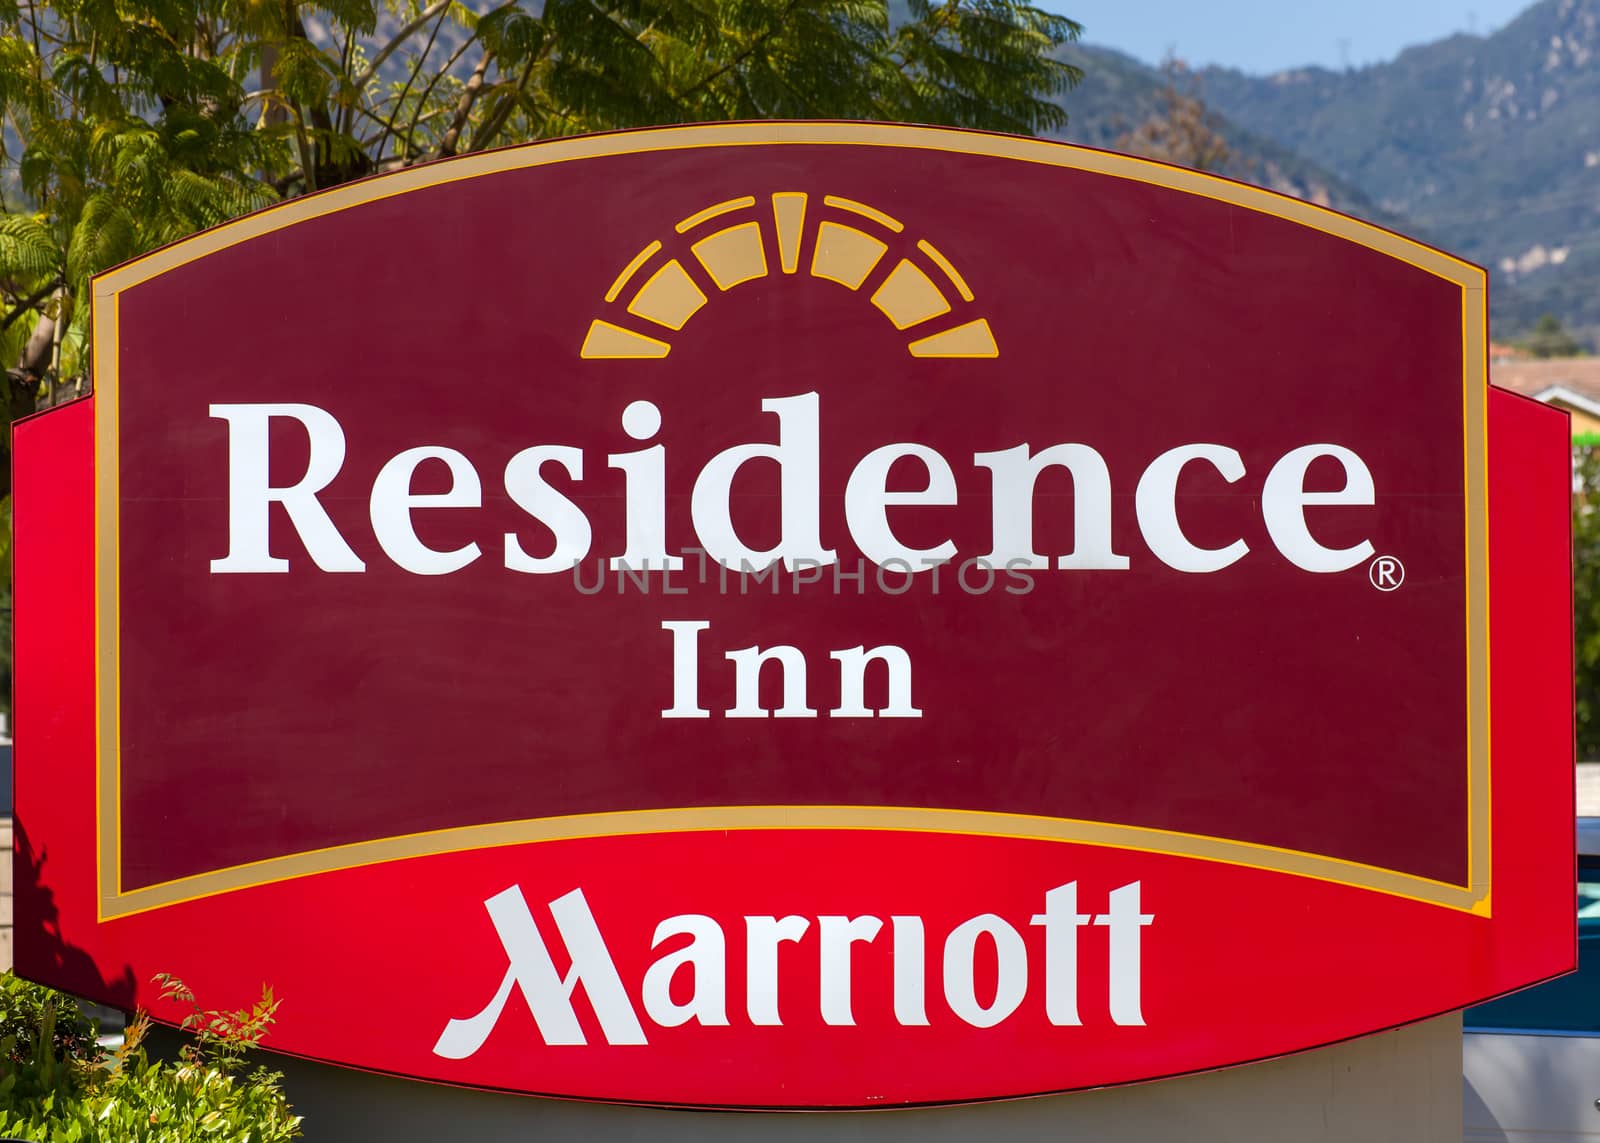 SANTA ANITA, CA/USA - APRIL 16, 2016: Residence Inn by Marriot sign and logo. Residence Inn by Marriott is a brand of extended stay hotels.